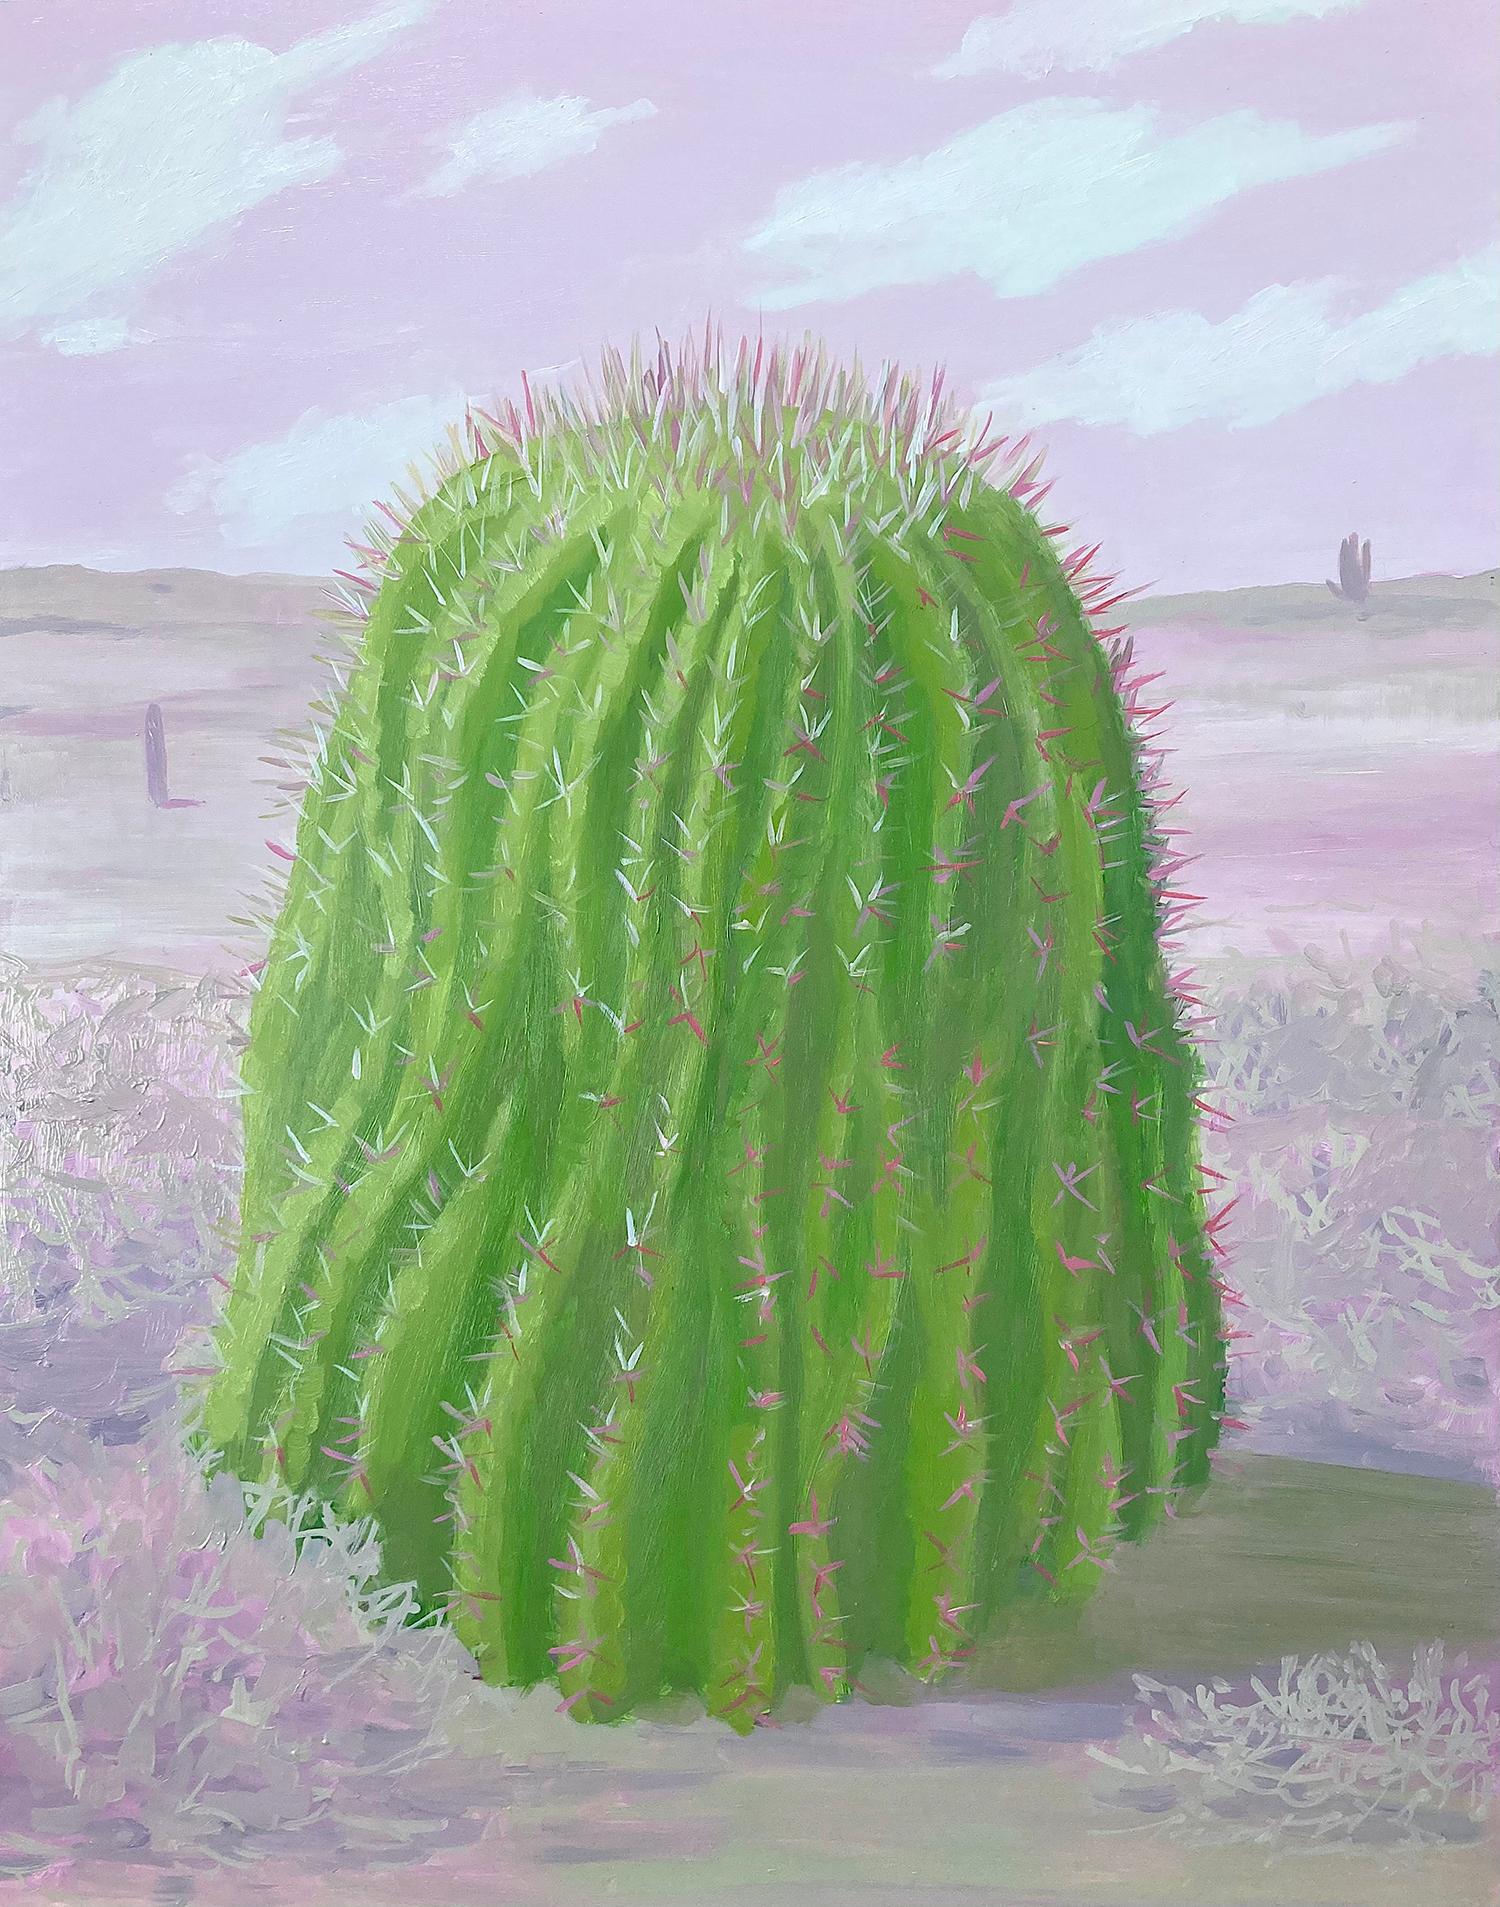 Anna Ortiz Landscape Painting - "Biznaga Chaparra" oil on panel, contemporary landscape with cactus painting